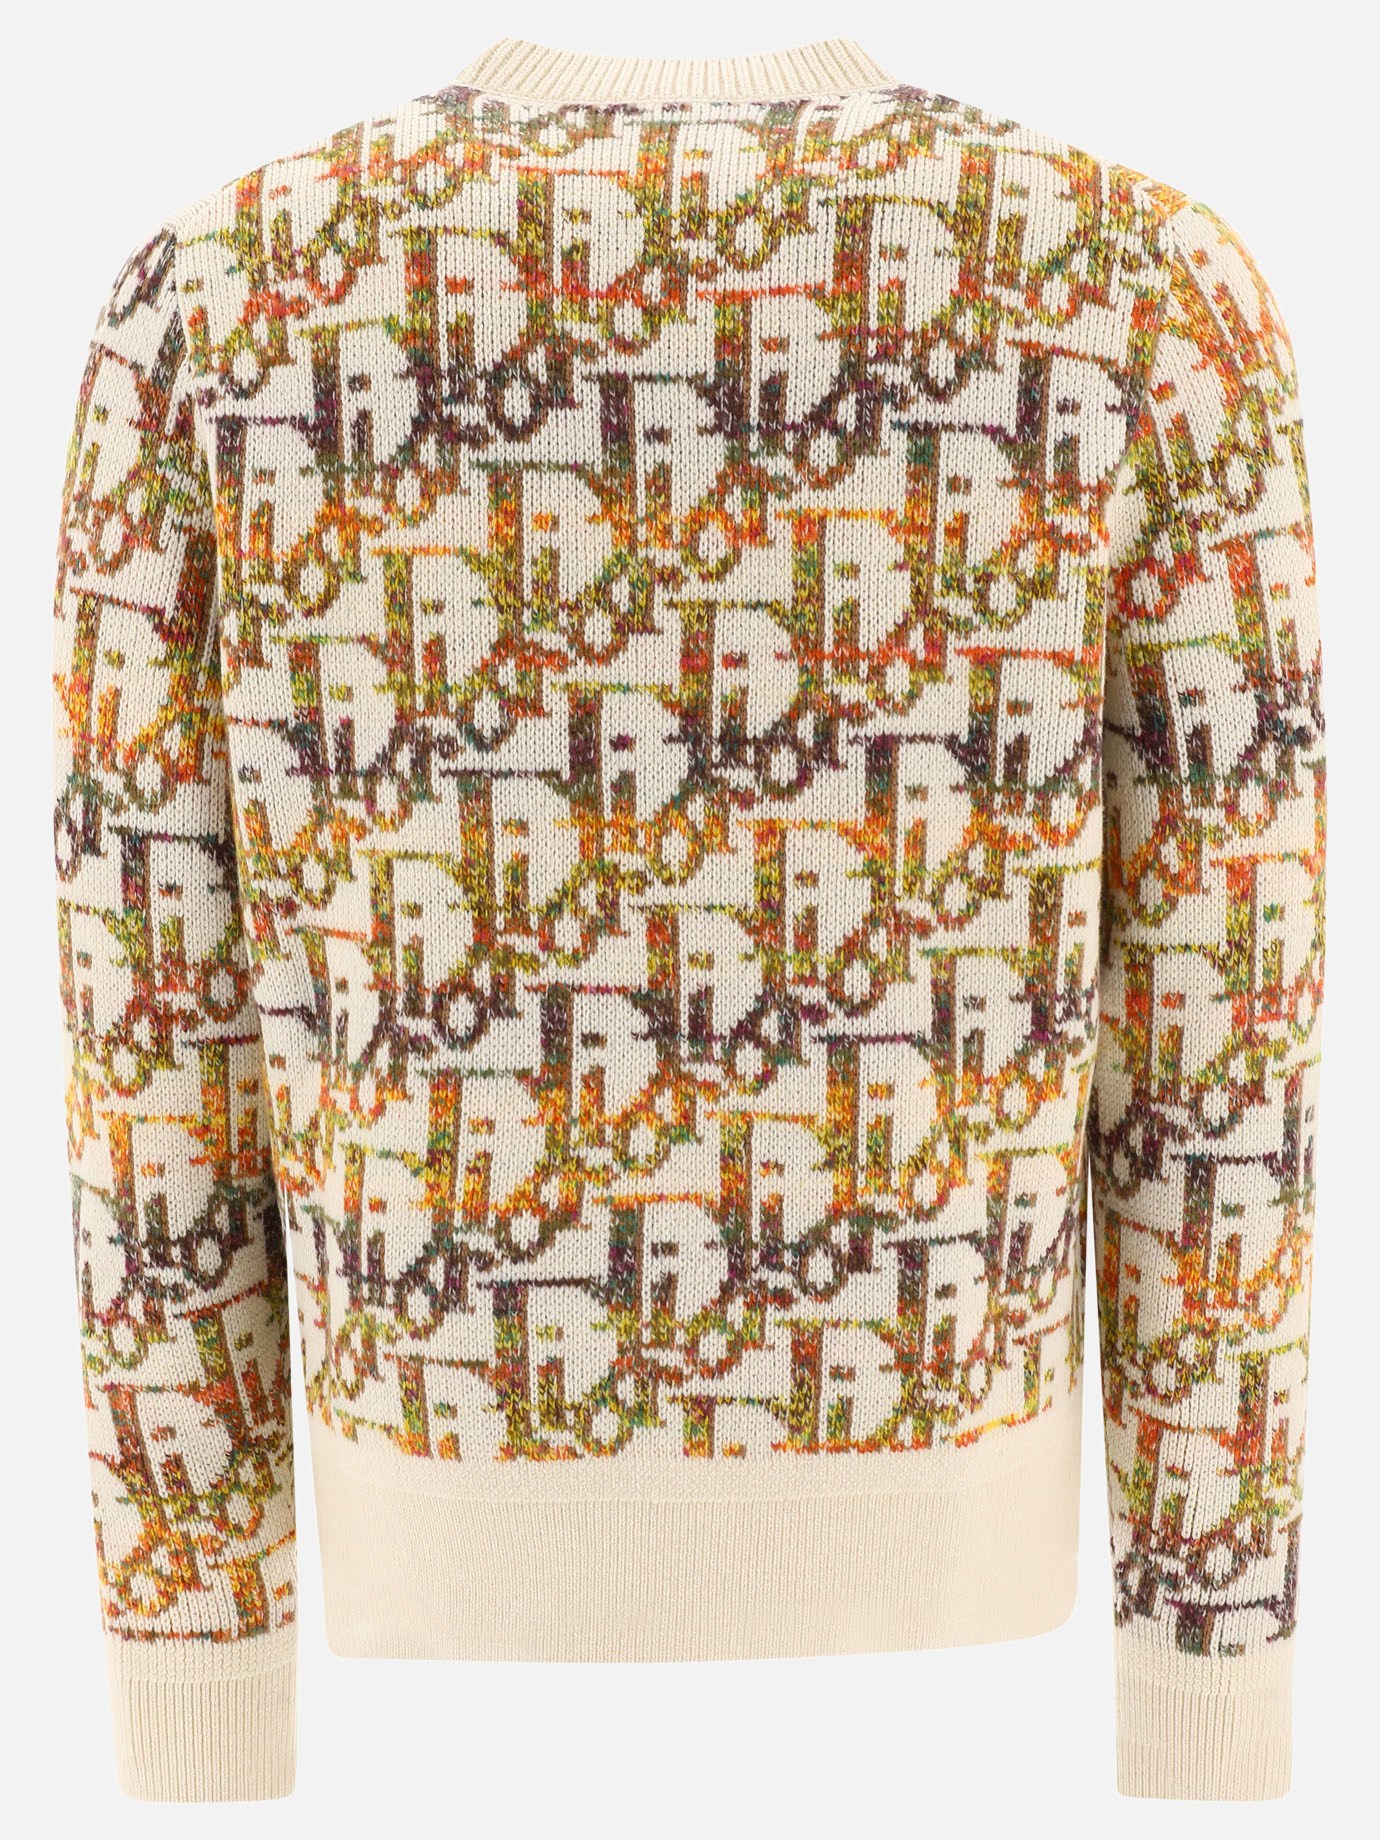  Dior Oblique  sweater by Dior